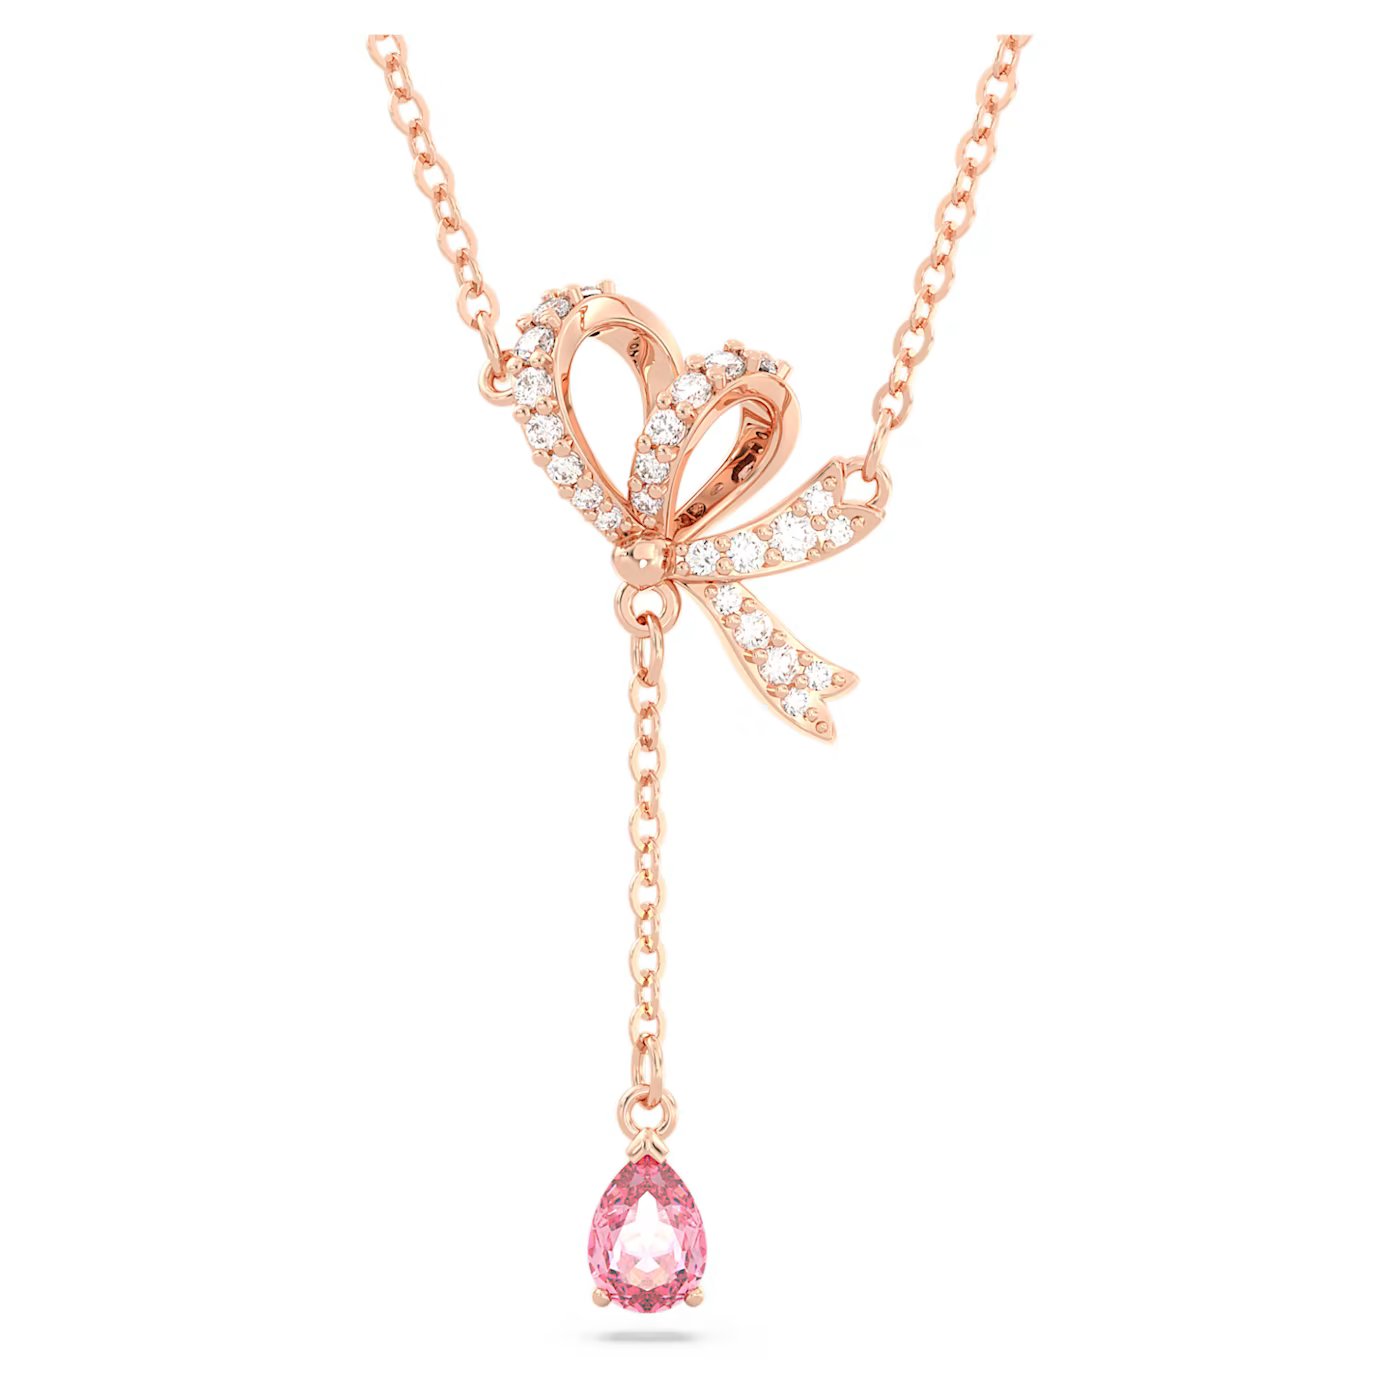 63c990104f070_volta-y-pendant--bow--pink--rose-gold-tone-plated-swarovski-5647569.jpg